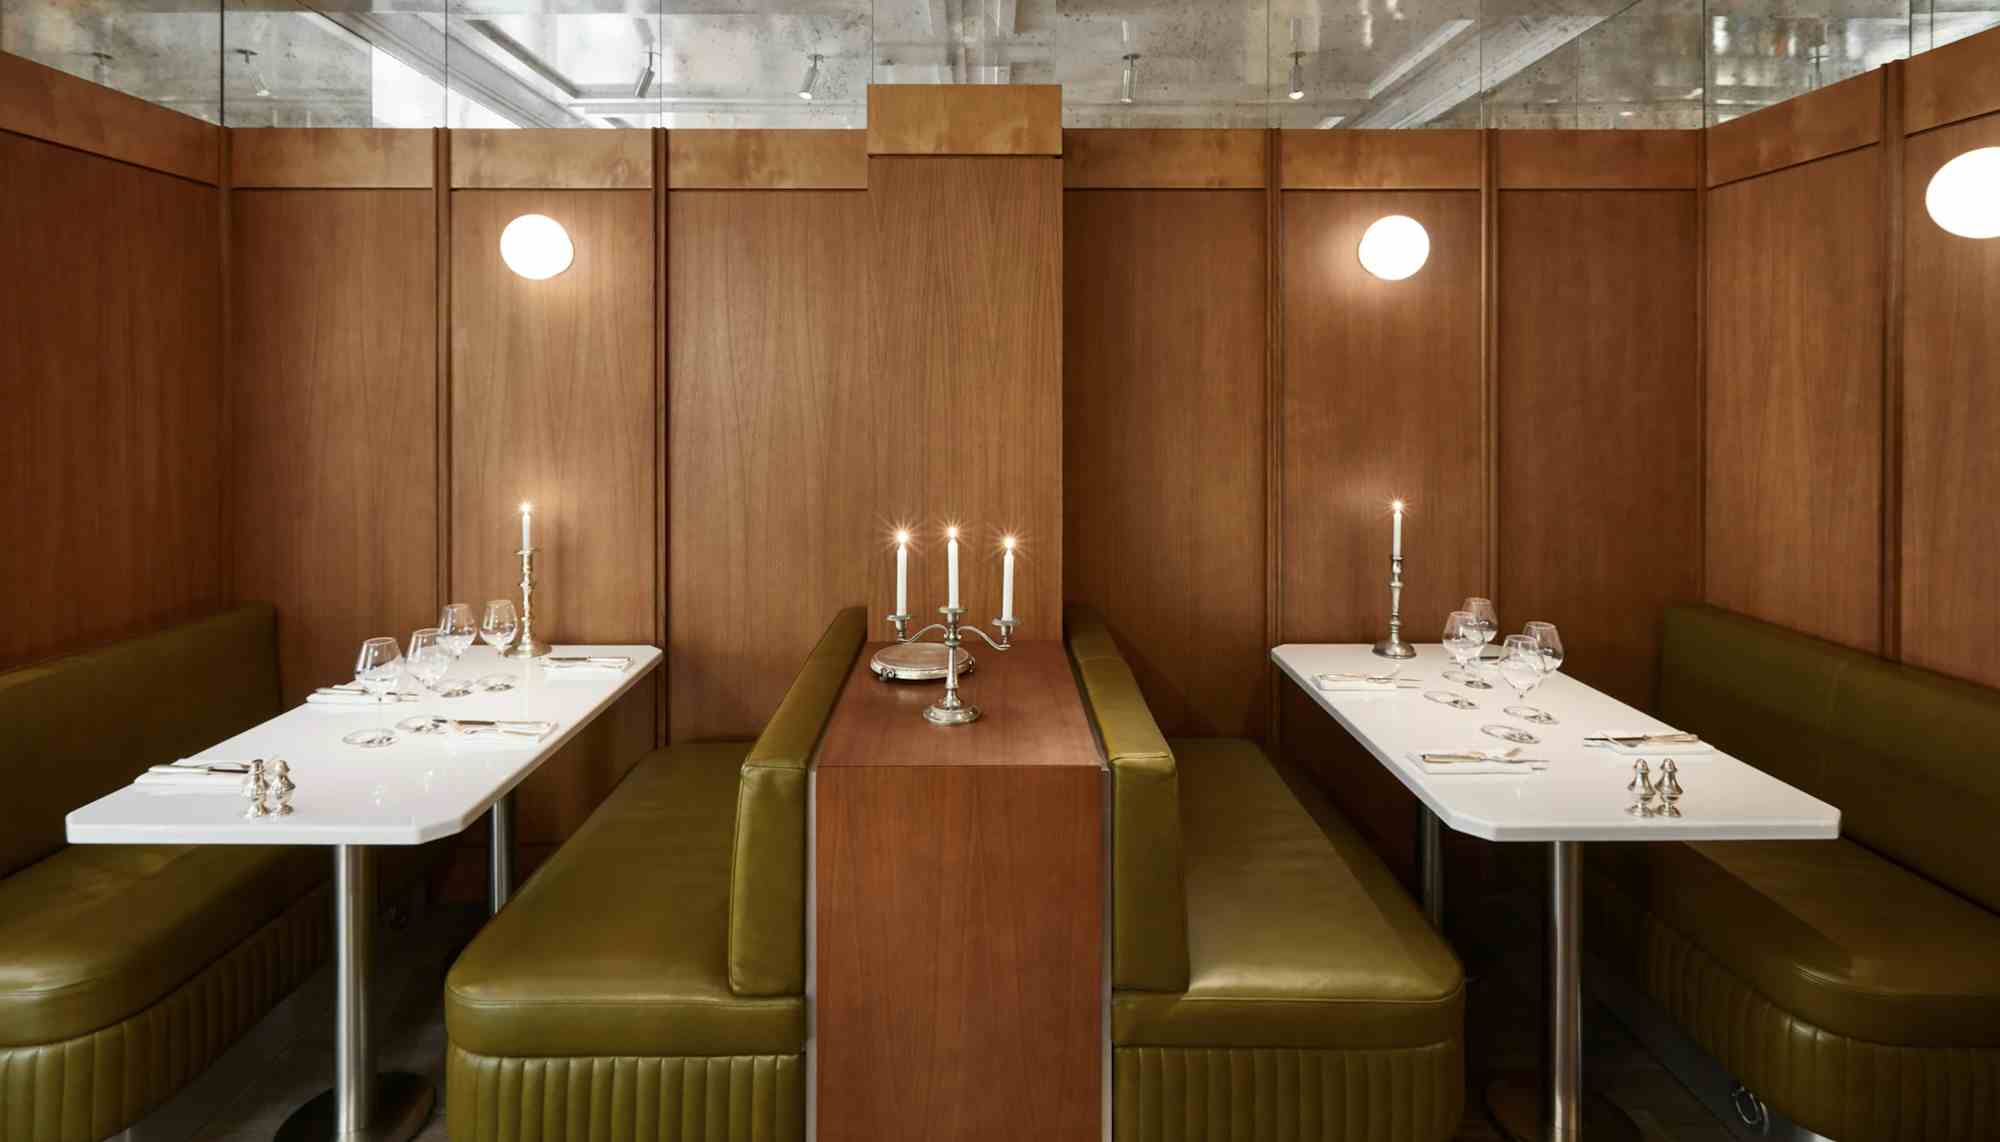 1970's-inspired restaurant, Abstinence, designed by Parisian studio Lizée-Hugot